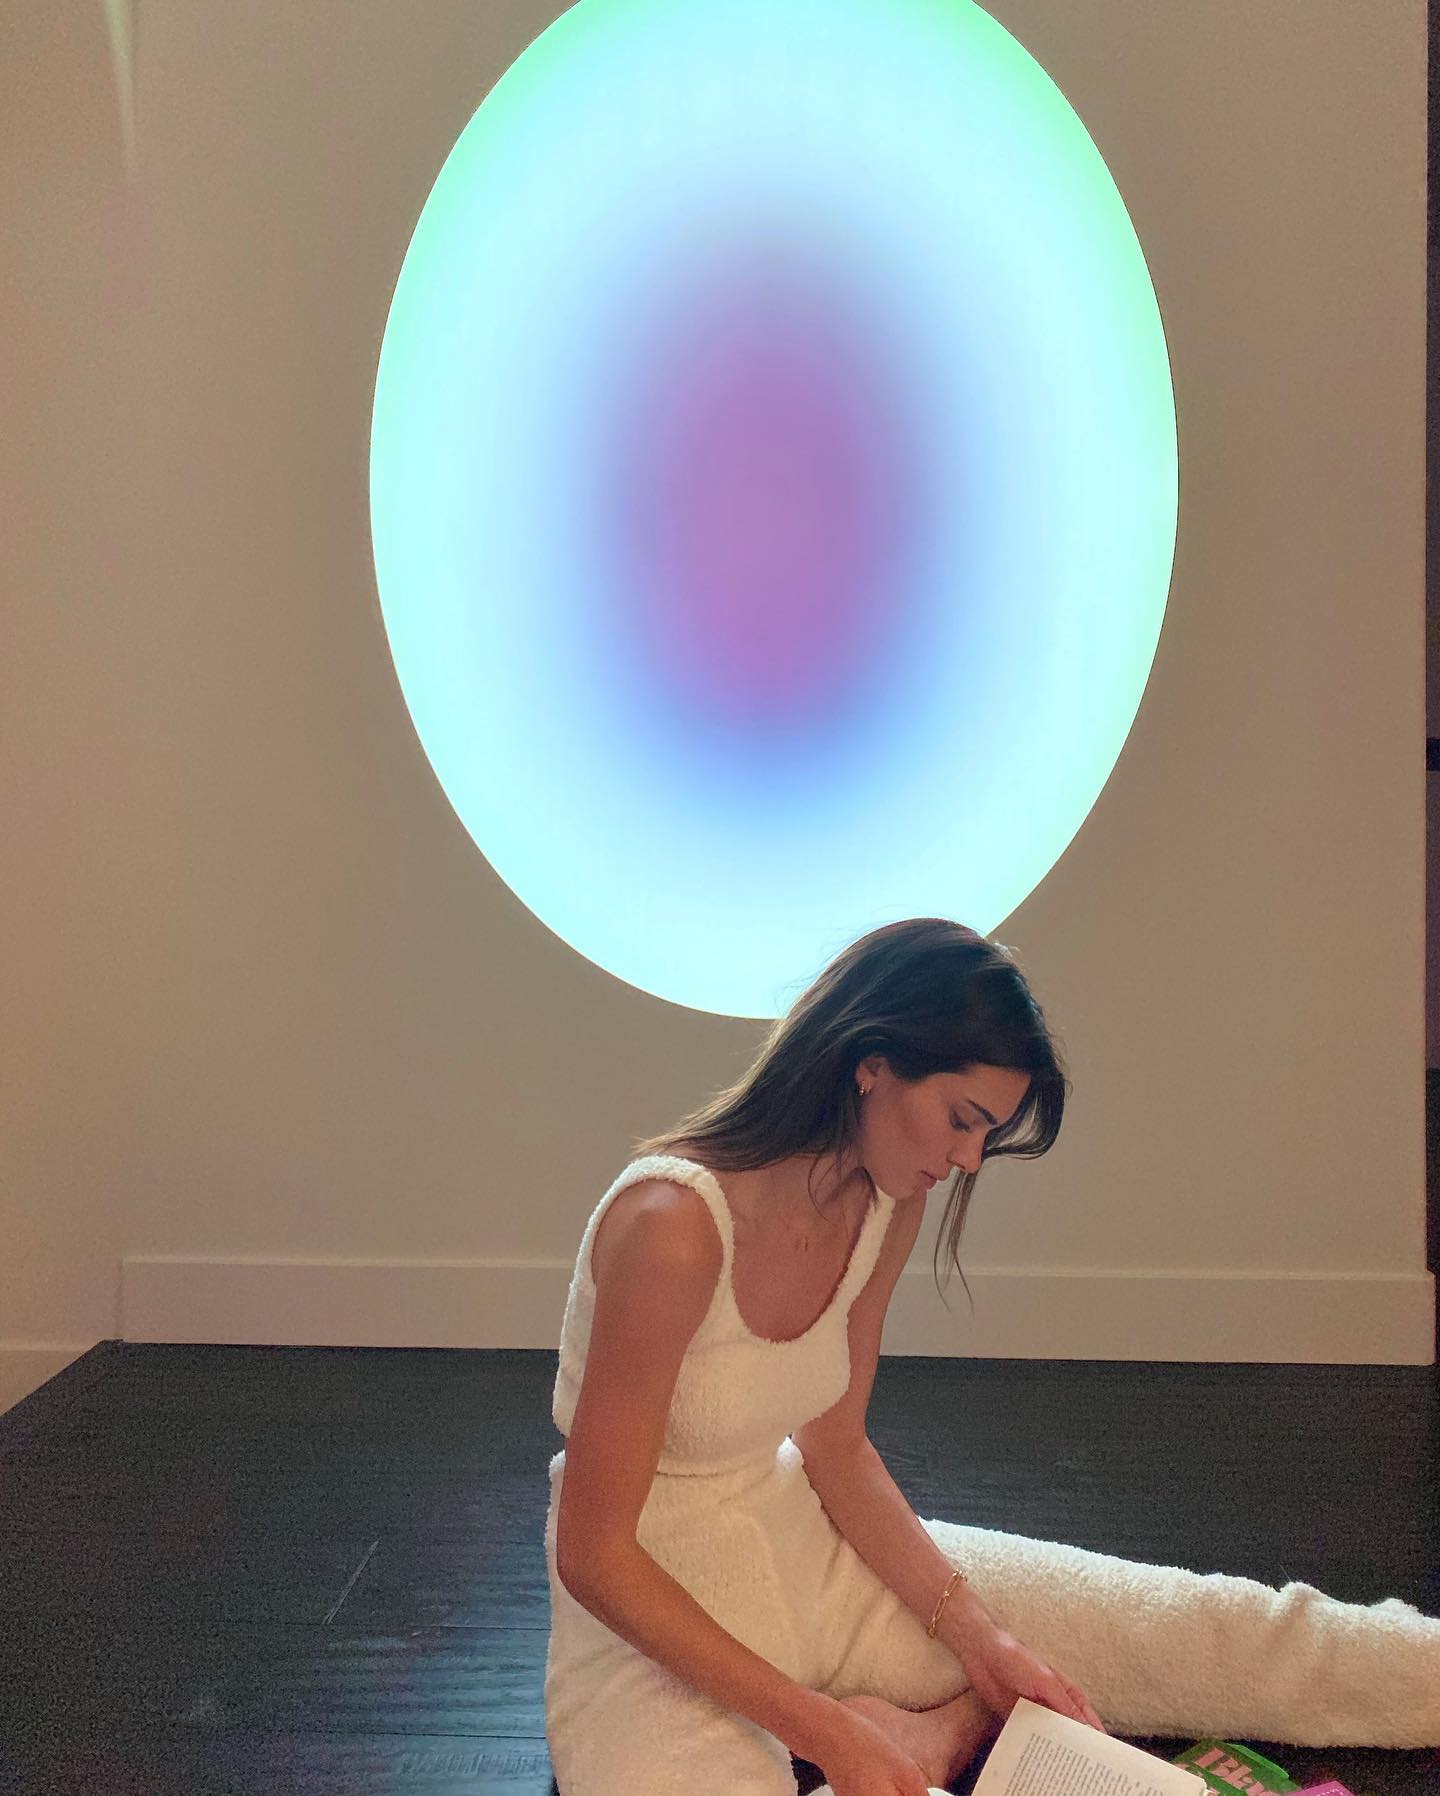 Kendall Jenner â€“ Social media and videos